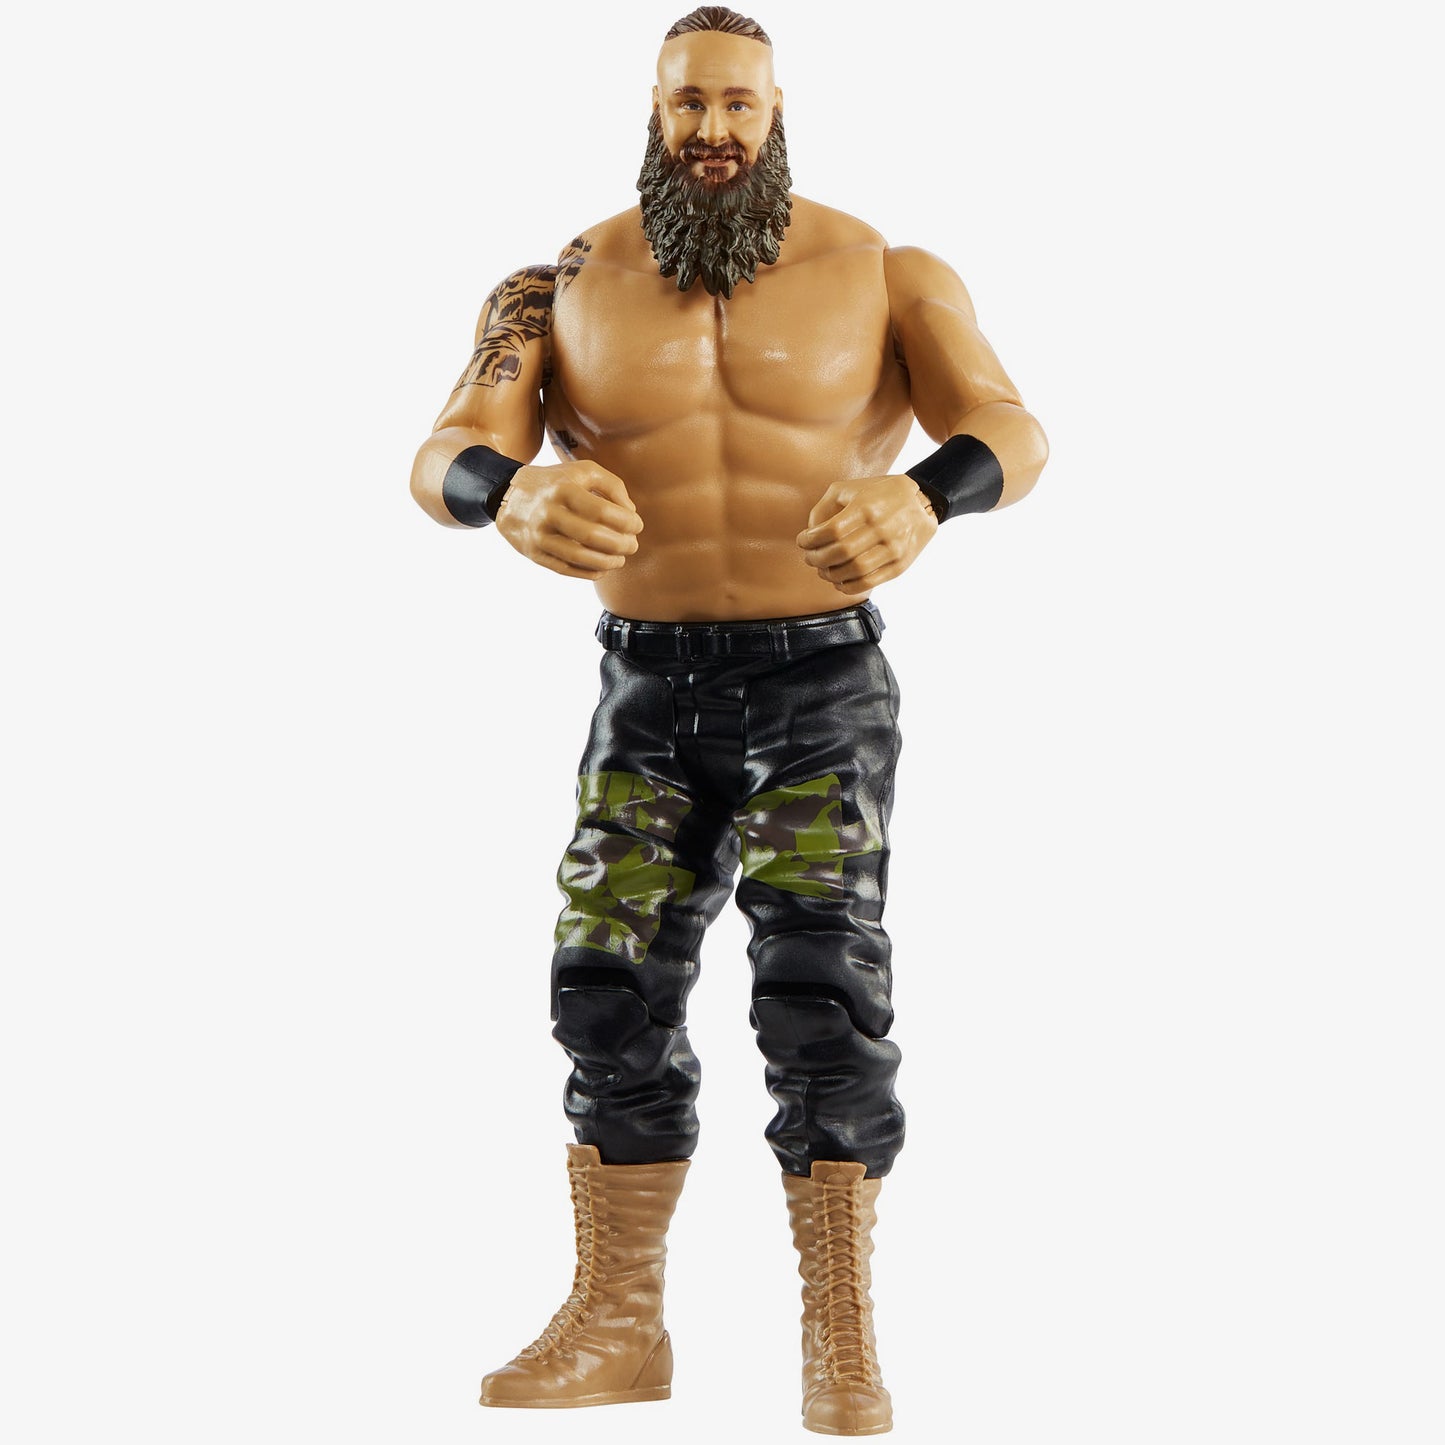 Braun Strowman - WWE Basic Series #112